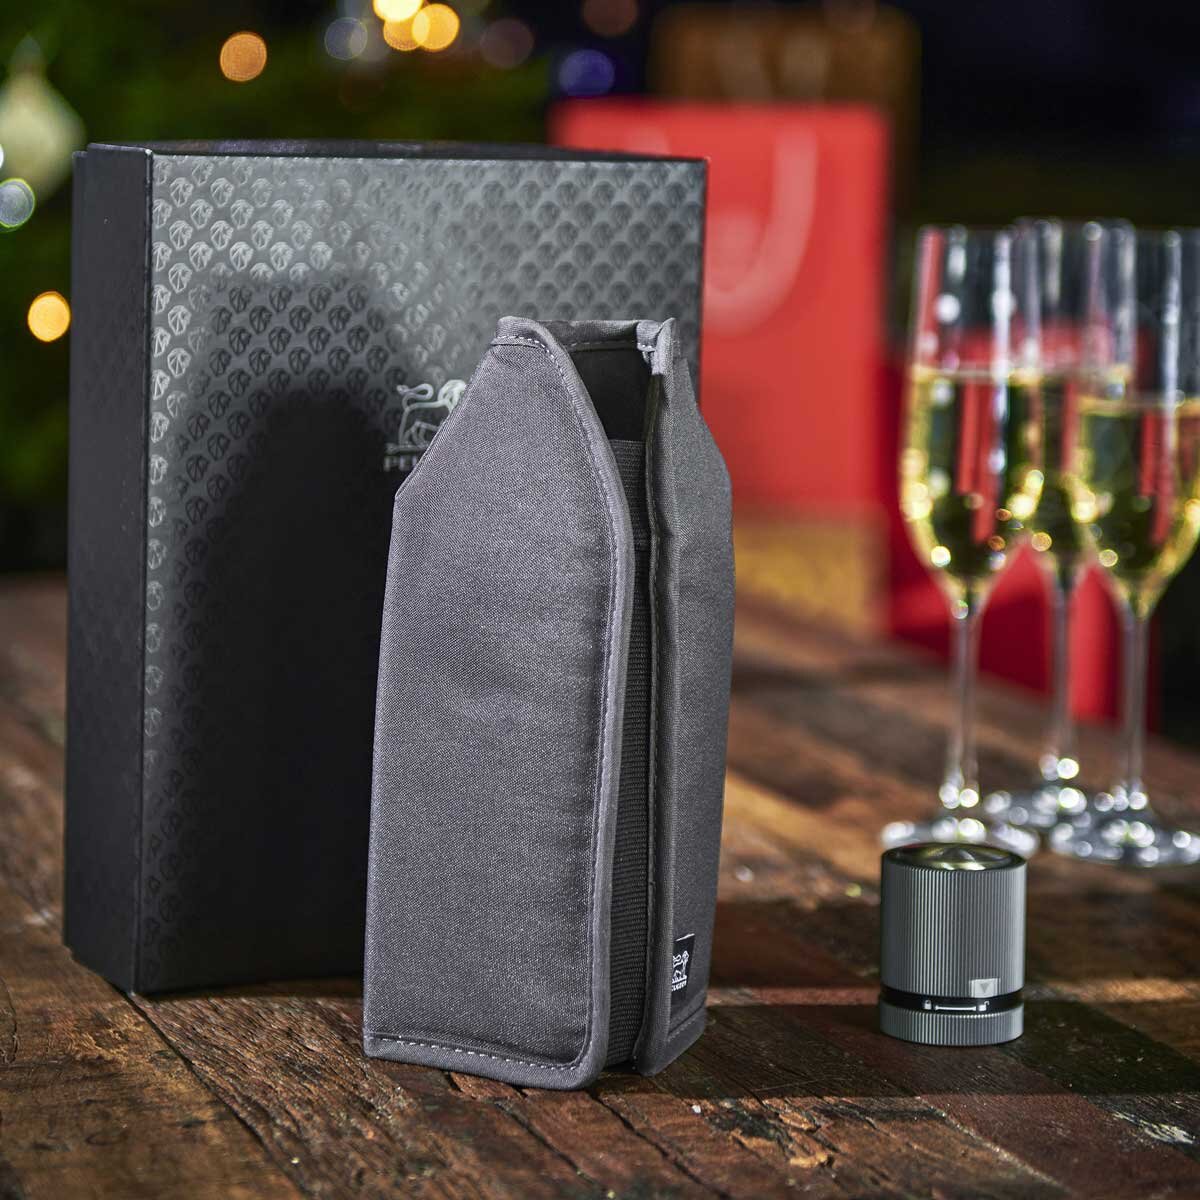 Peugeot Paris Frizz Wine Cooler Sleeve & Stopper Gift Set